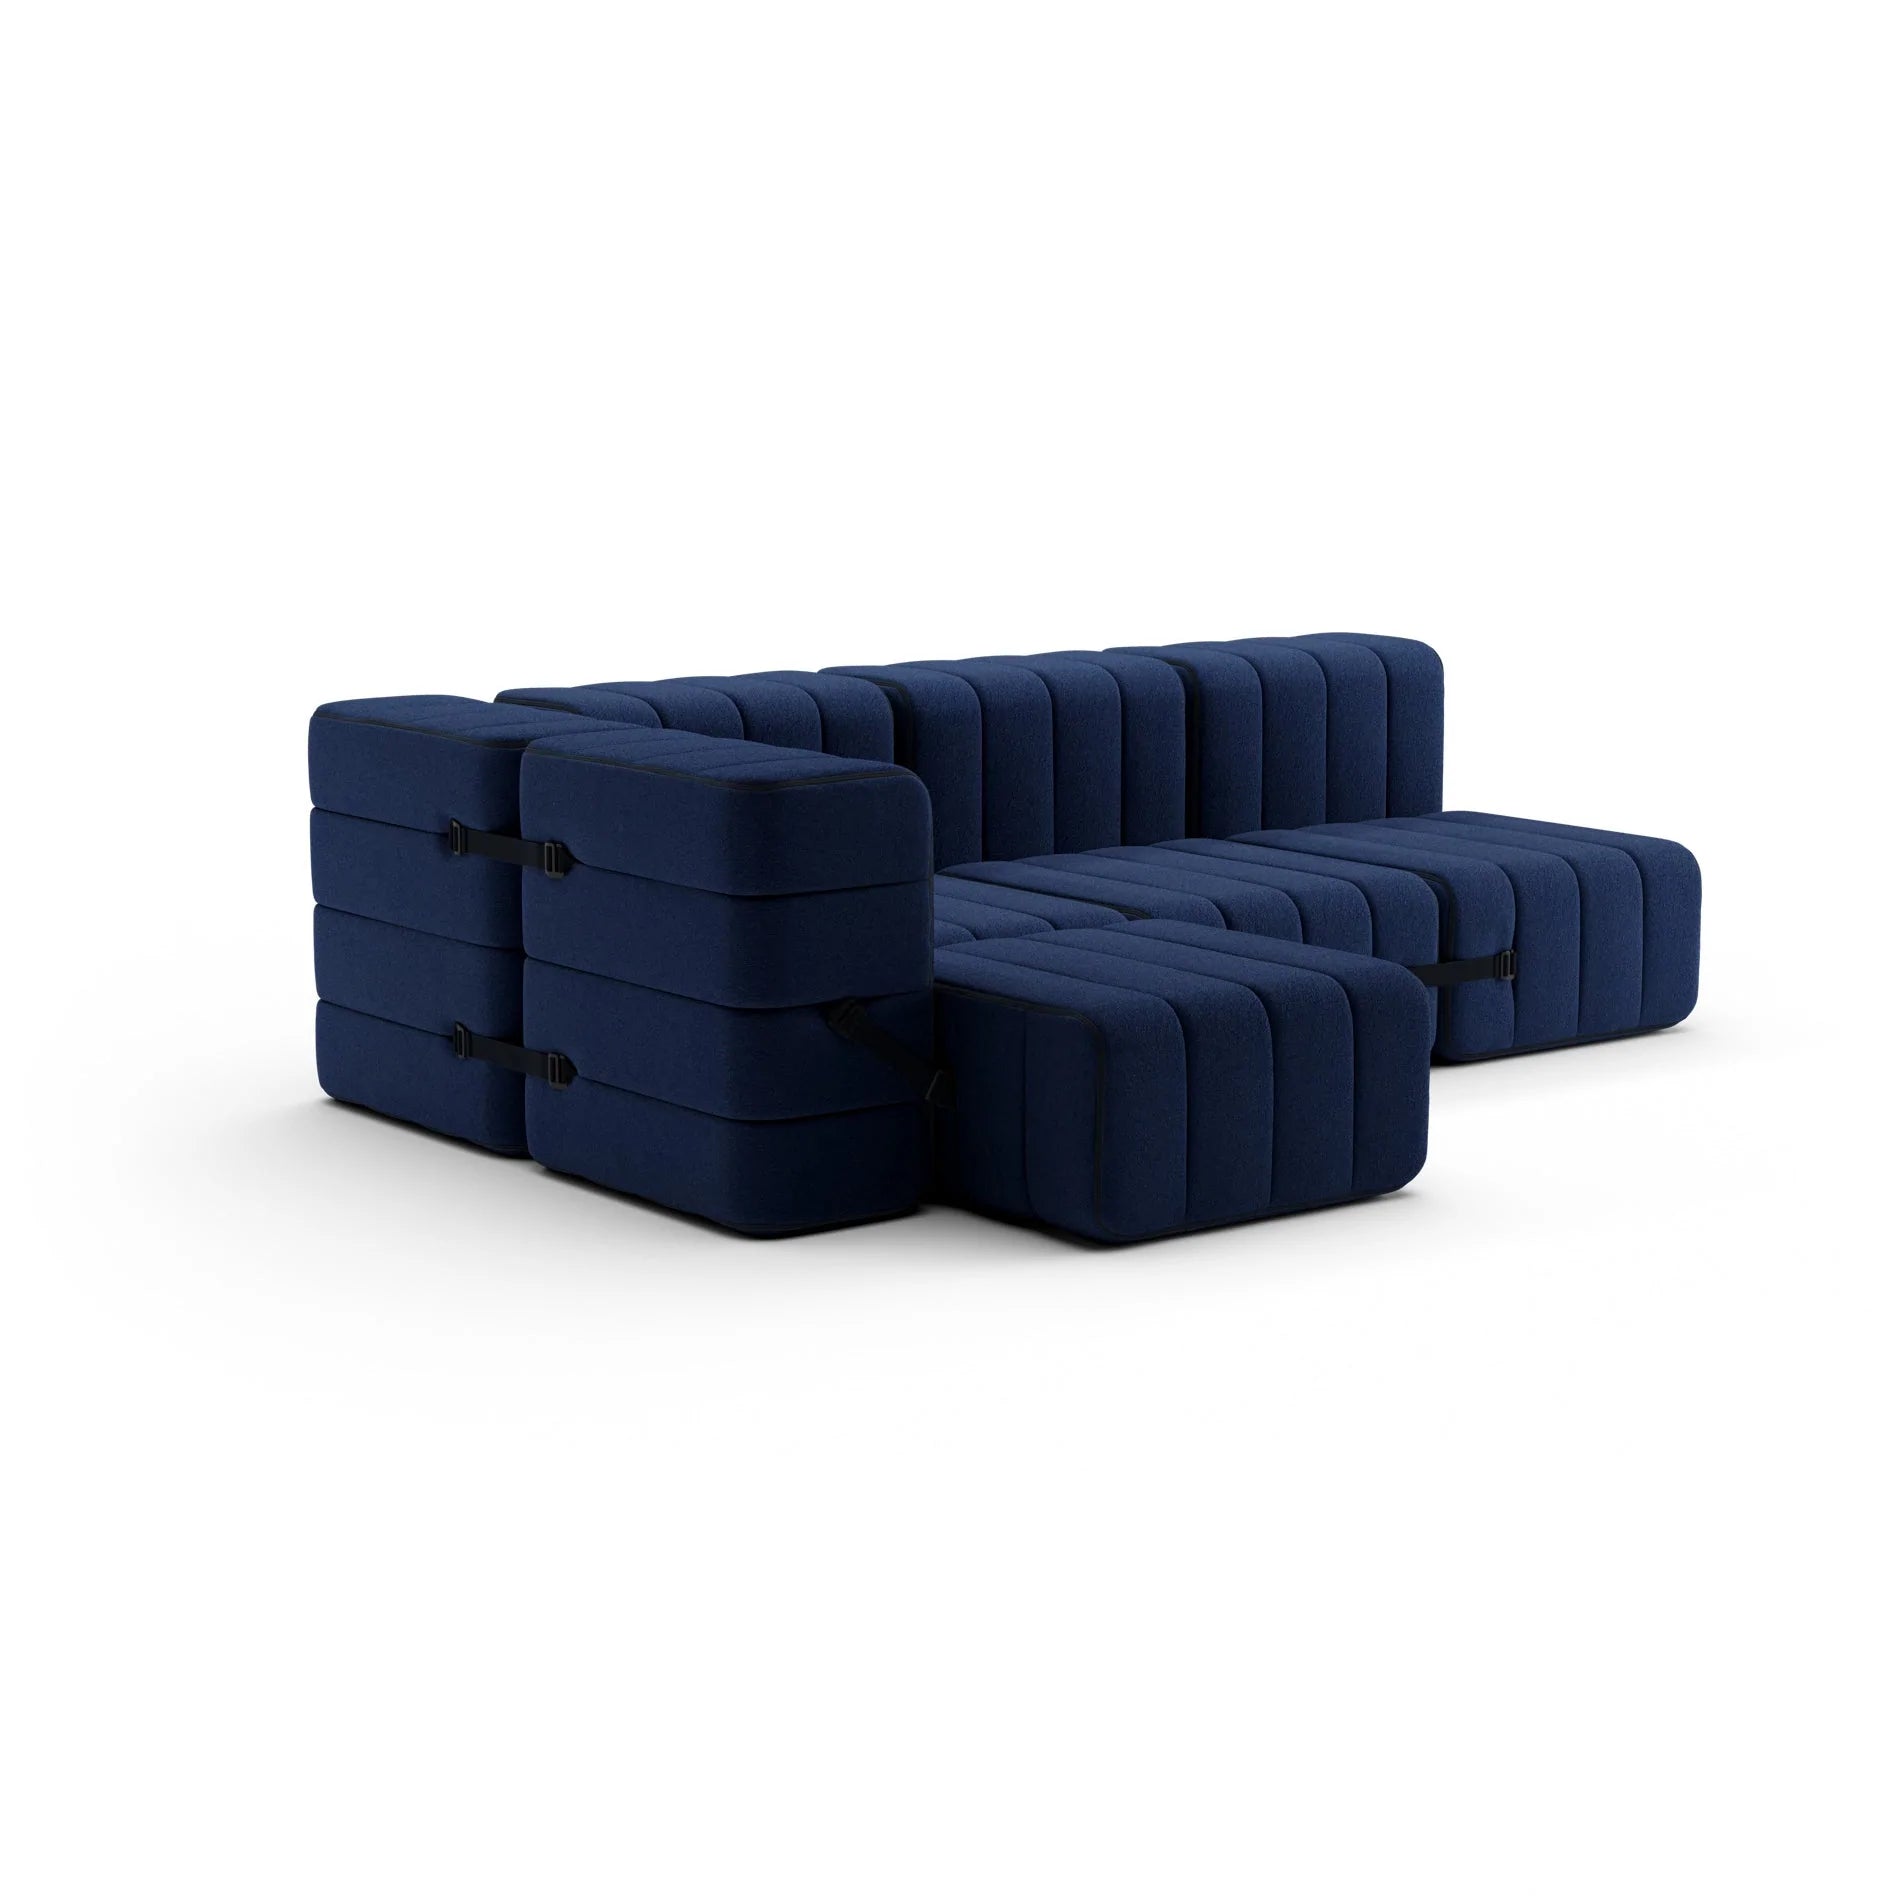 Modular sofa system Curt - Jet dark blue Sofas by Ambivalenz